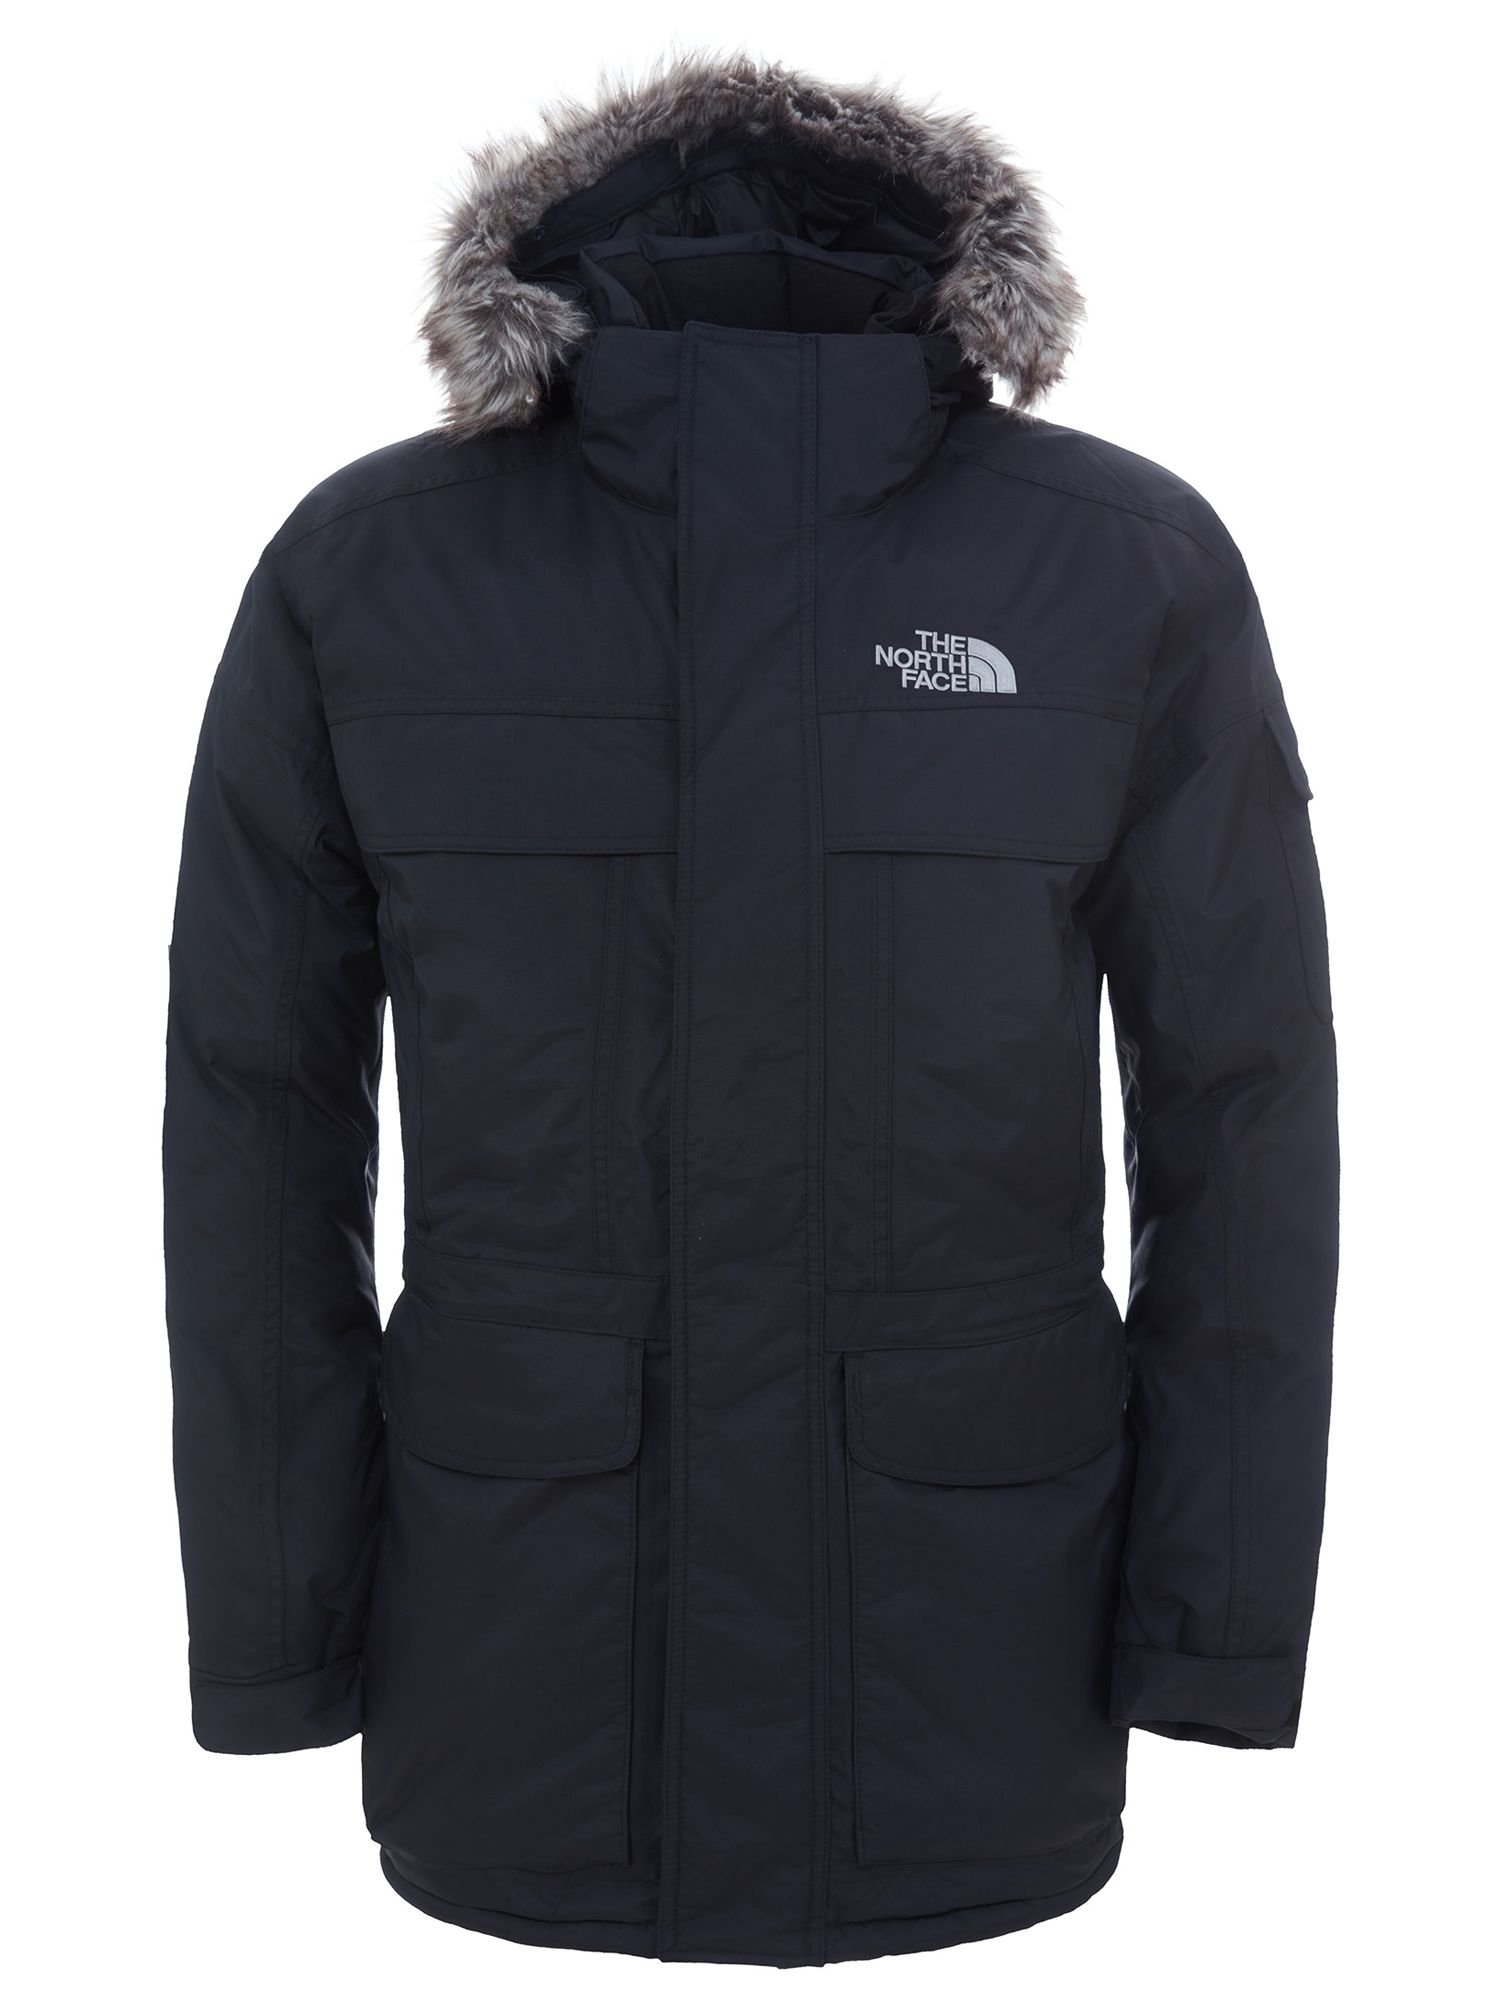 The North Face Men's McMurdo Parka Jacket at John Lewis & Partners